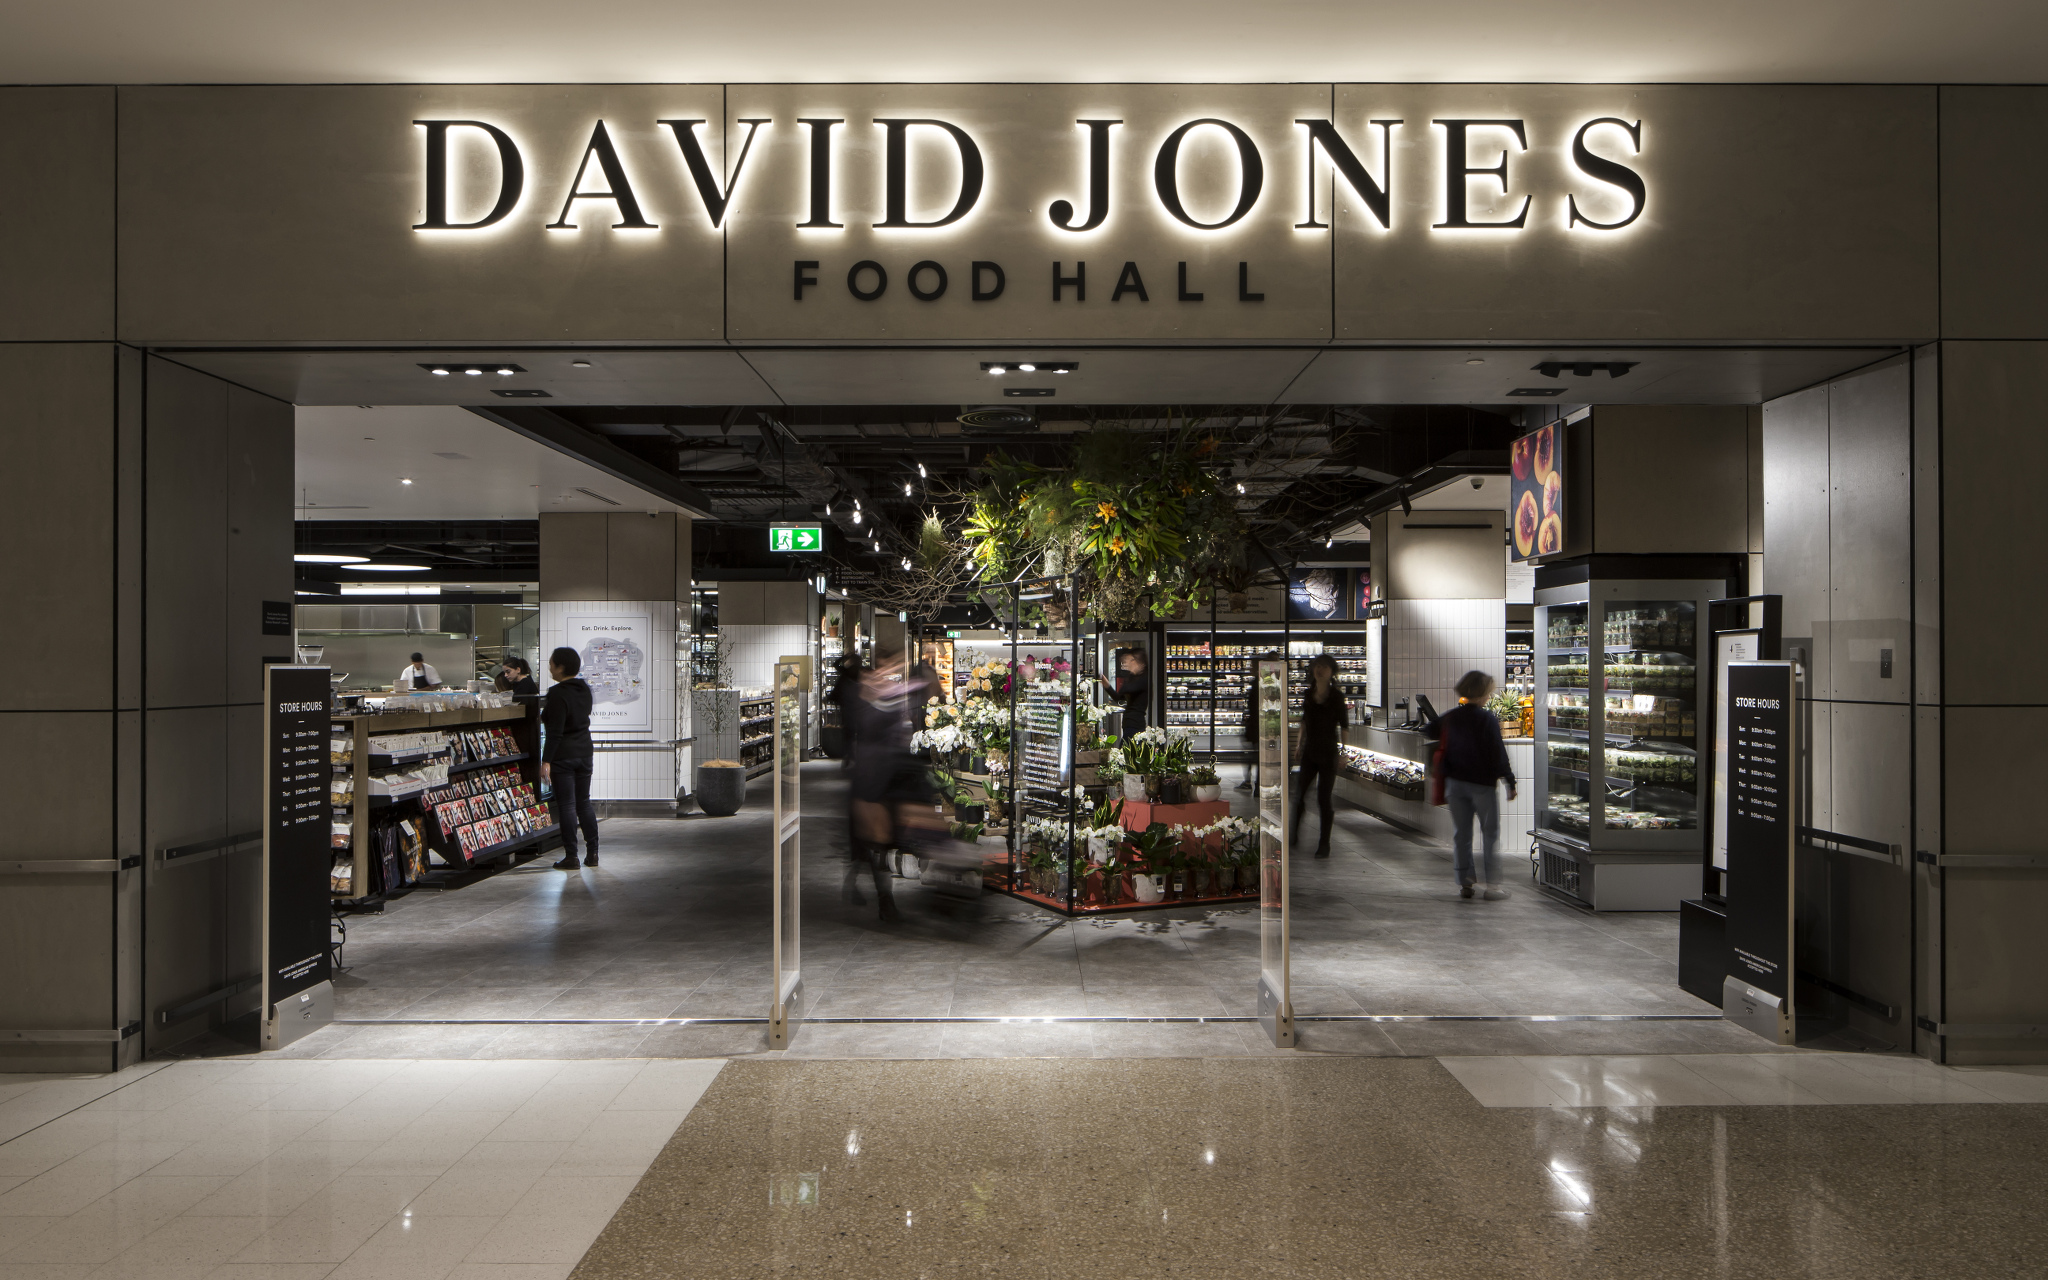 David Jones  Paris Fashion Shops